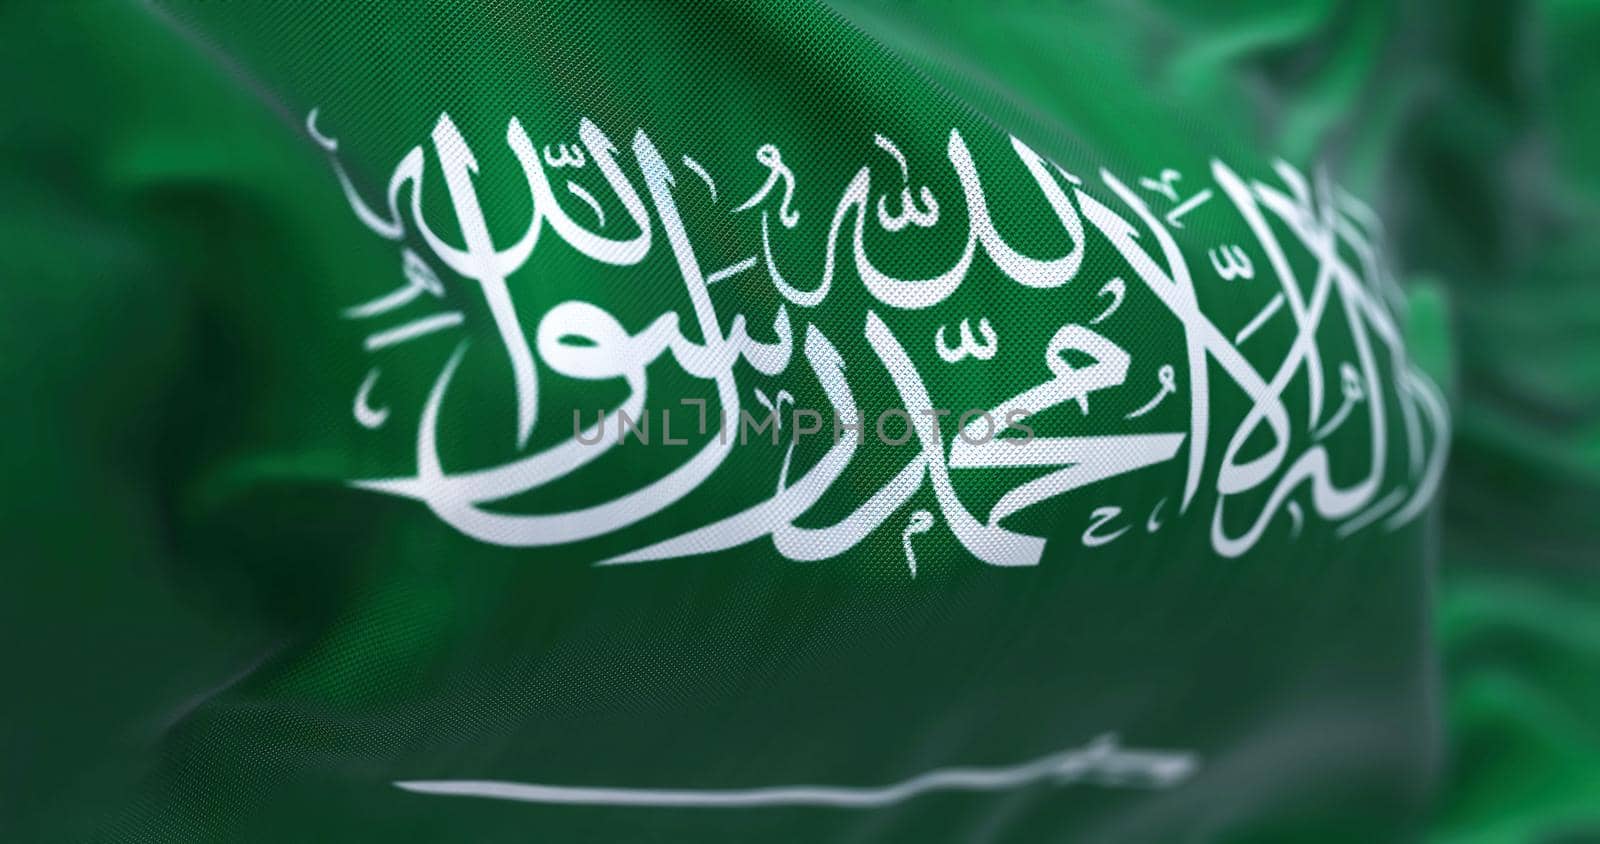 Close-up view of Saudi Arabia national flag waving in the wind by rarrarorro